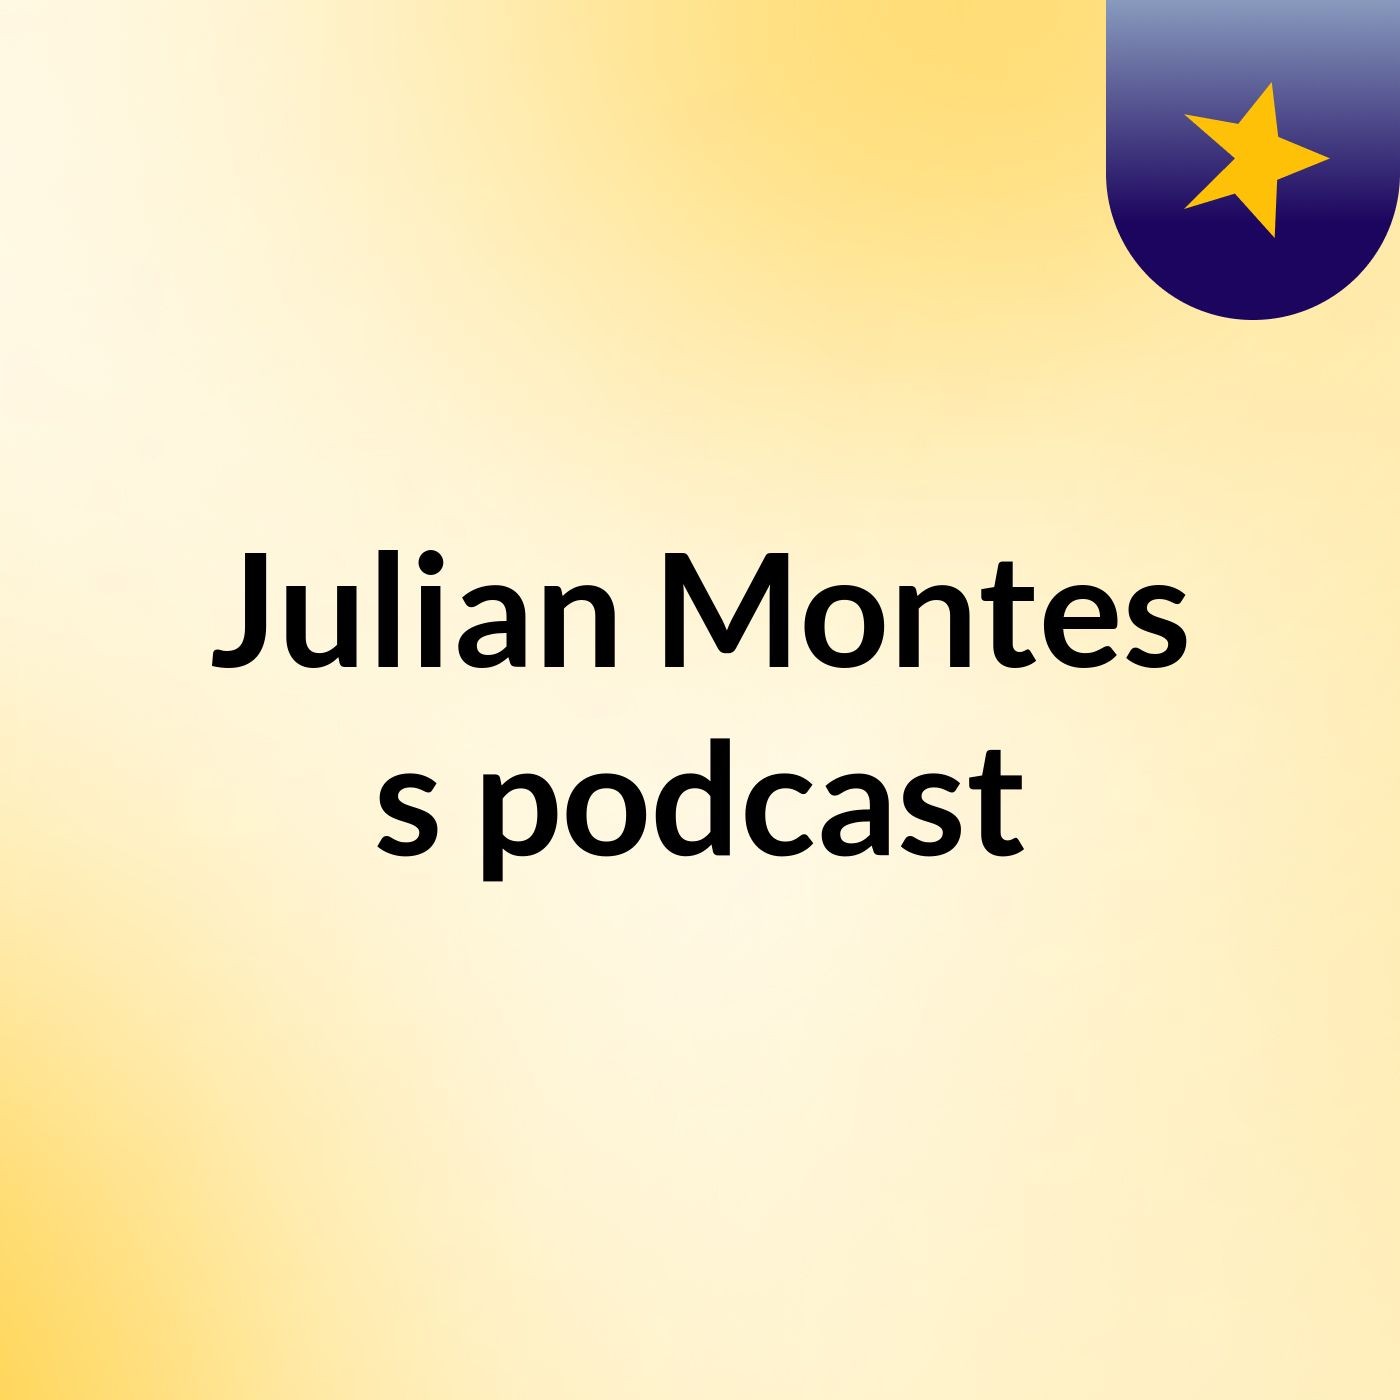 Episode 5 - Julian Montes's podcast